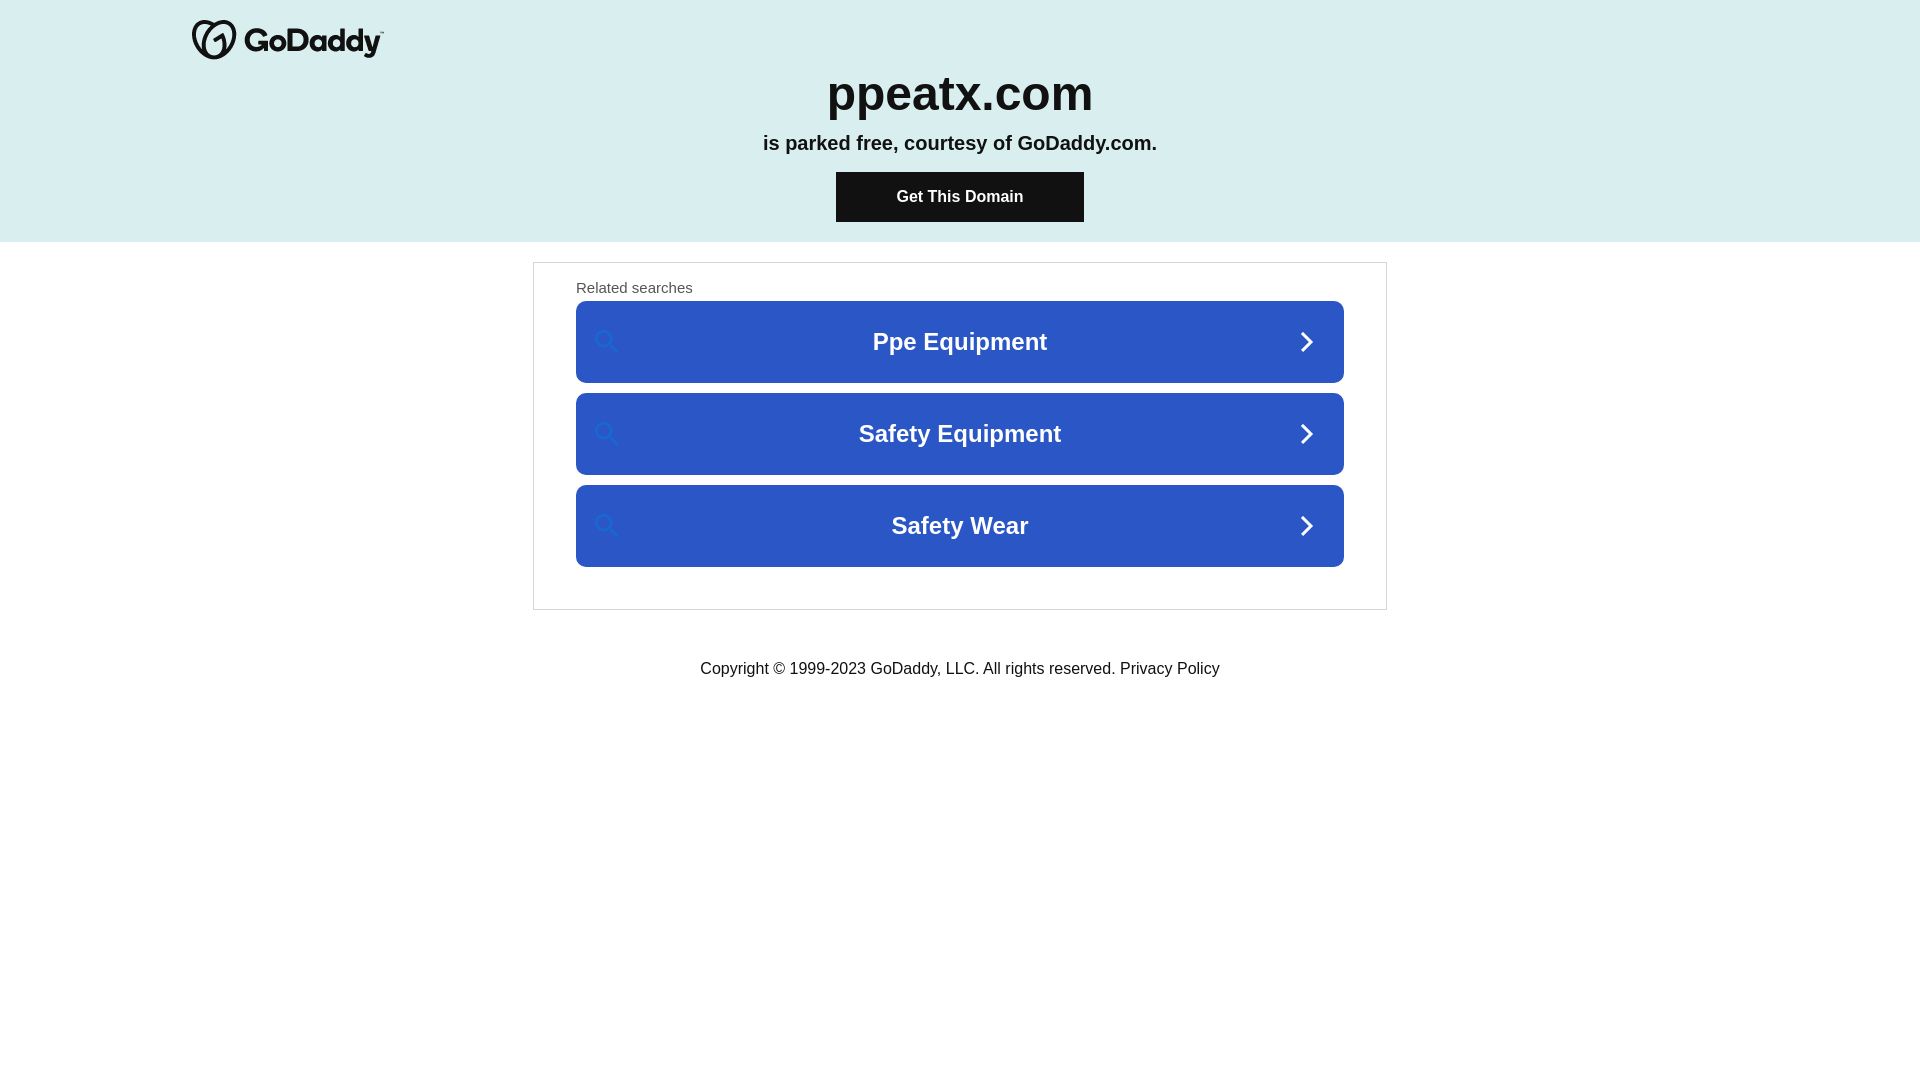 вебсайт ppeatx.com Є   ONLINE